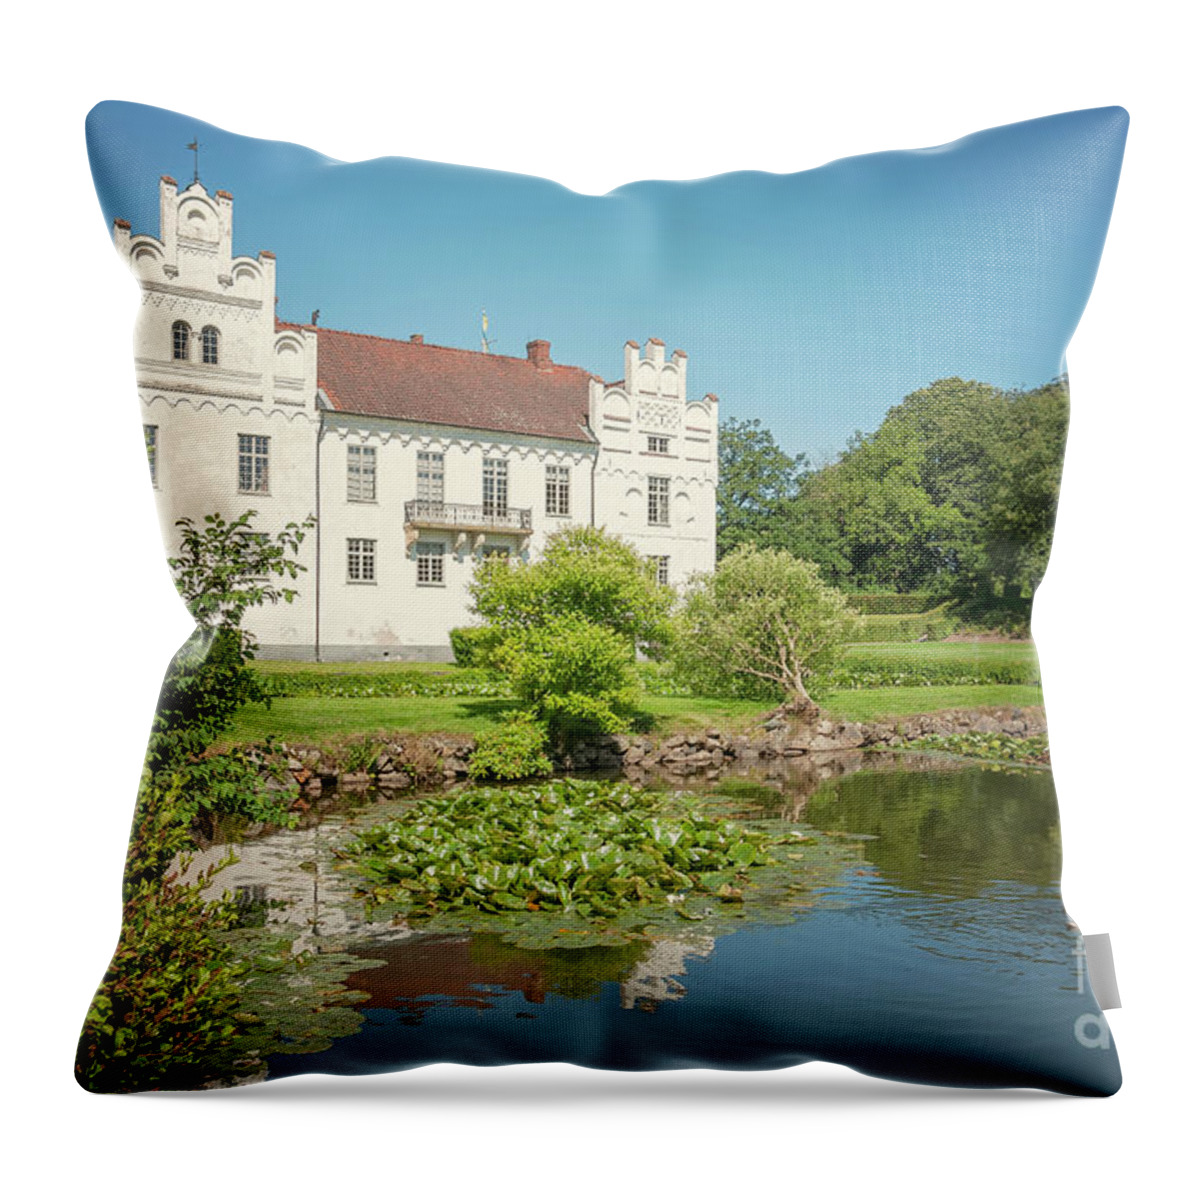 Wanas Throw Pillow featuring the photograph Wanas Castle Duck Pond by Antony McAulay